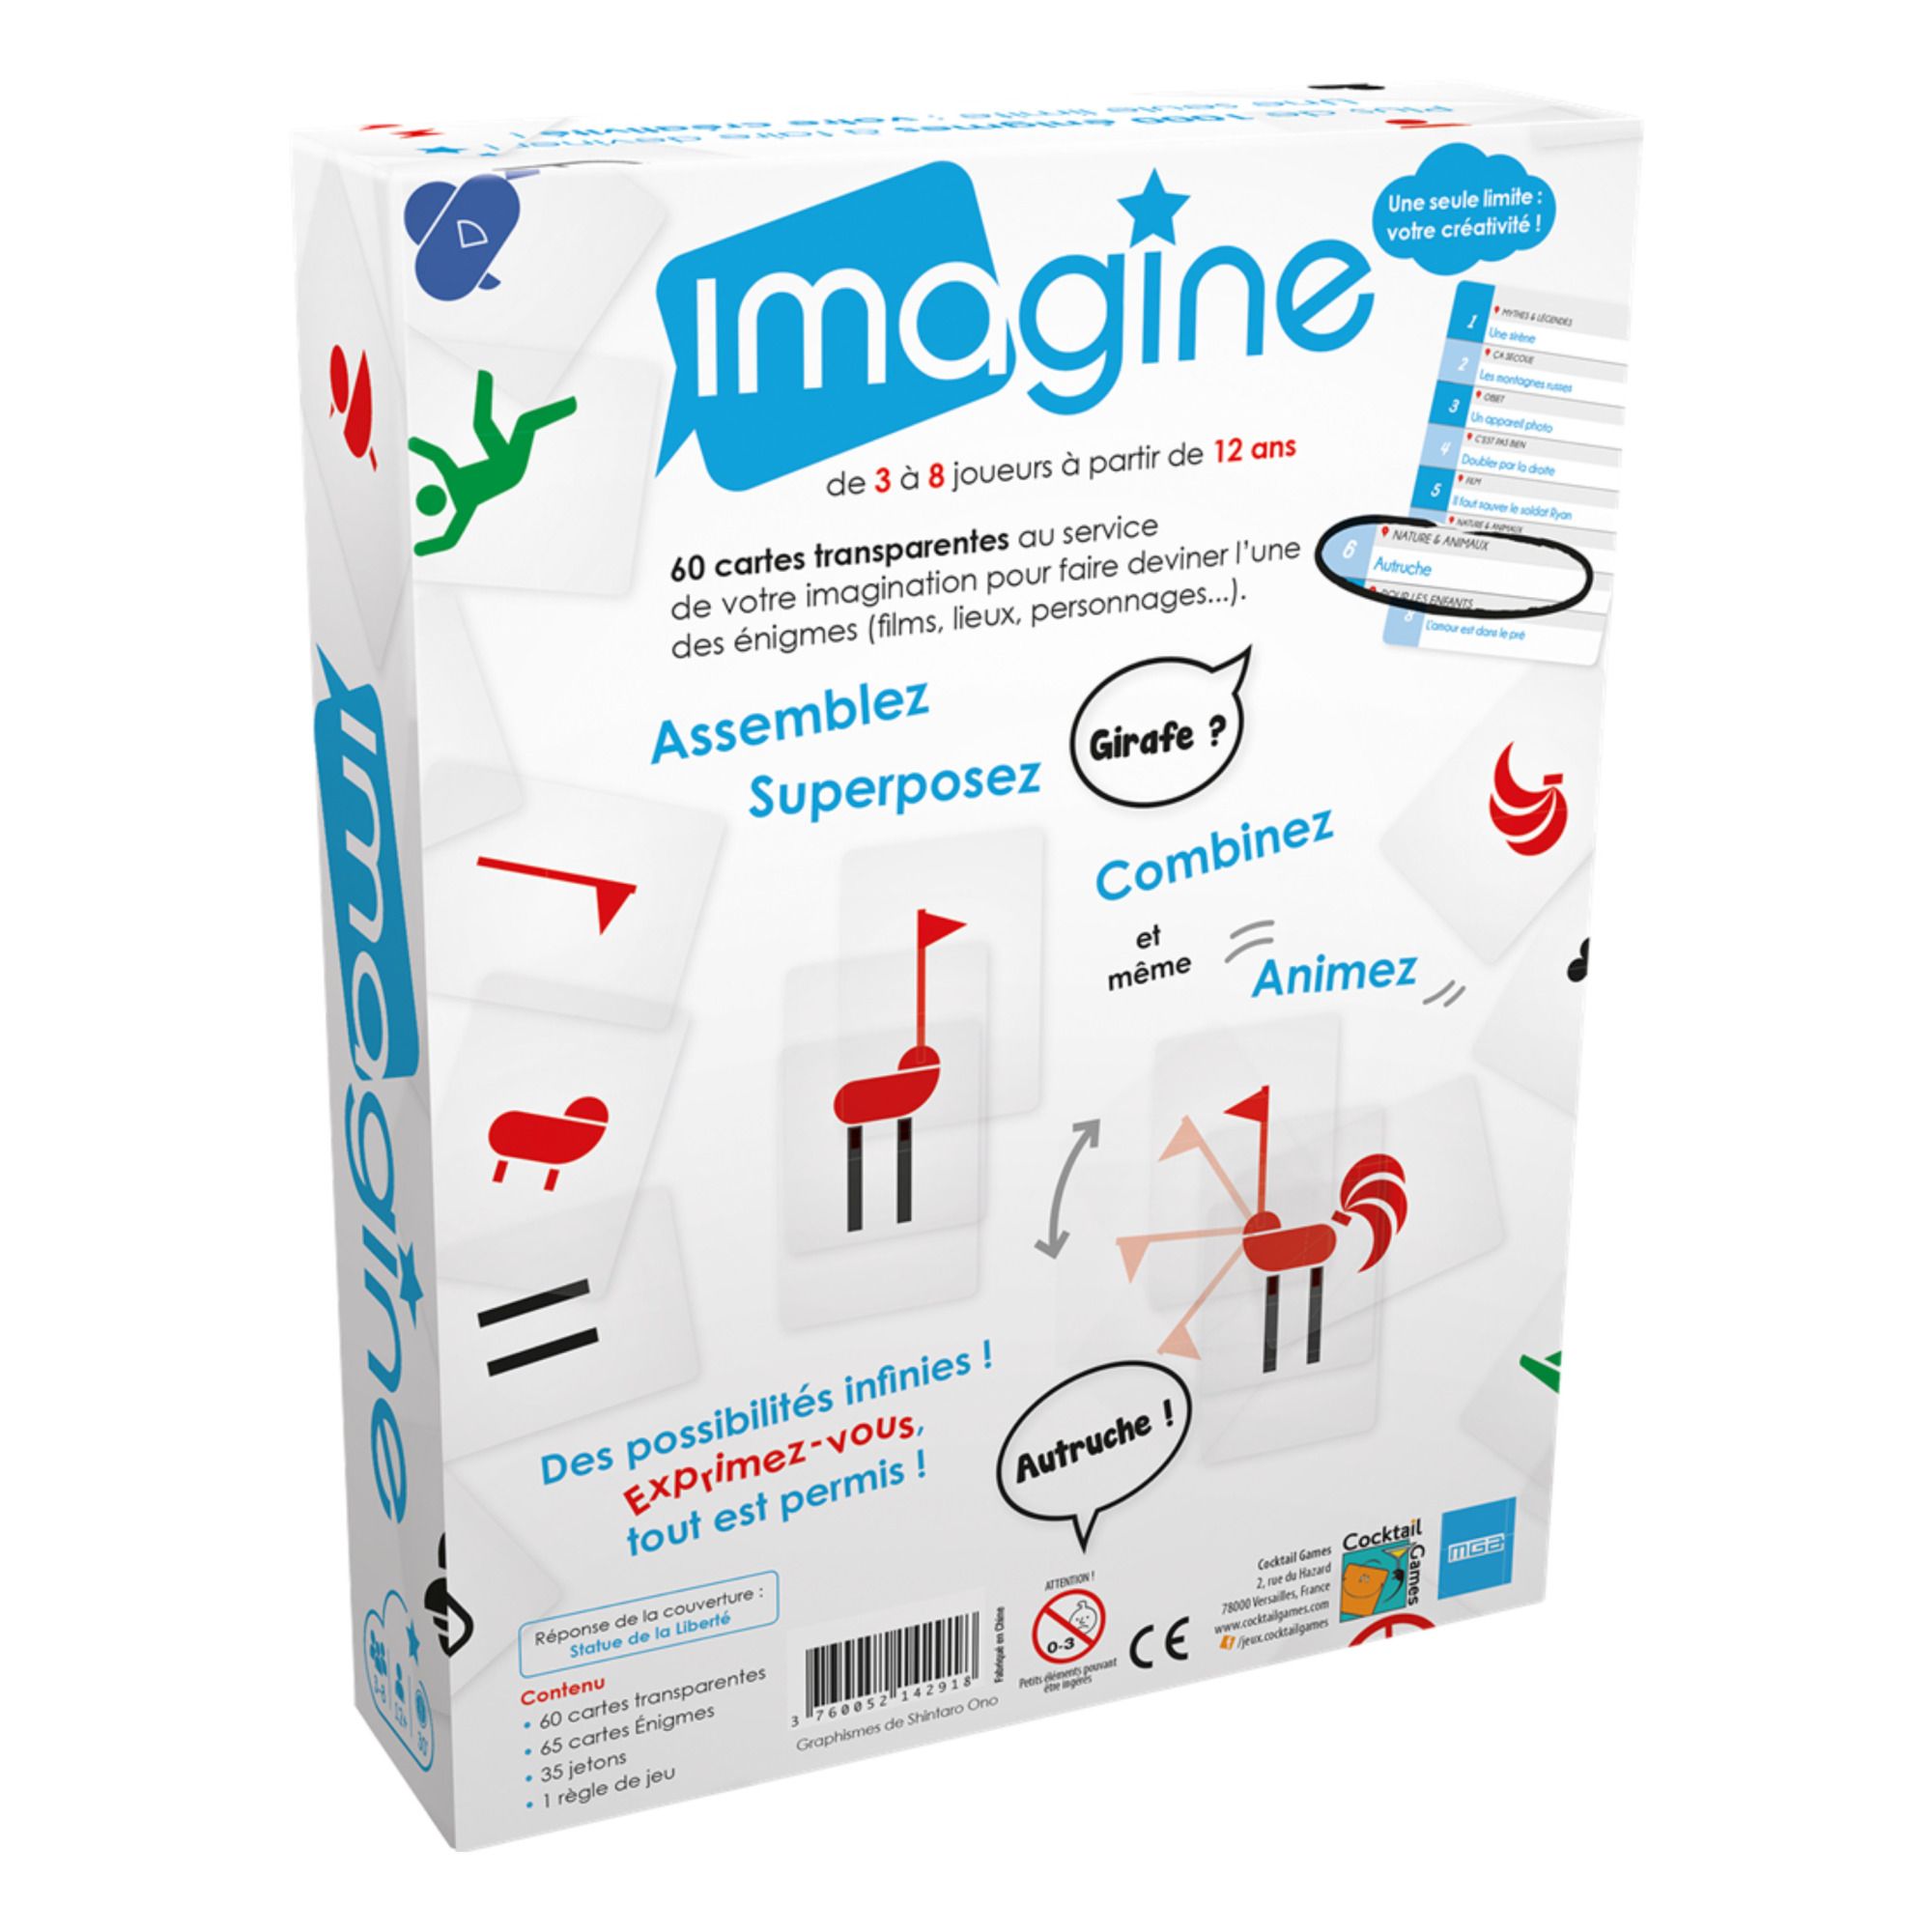 Imagine- Product image n°1